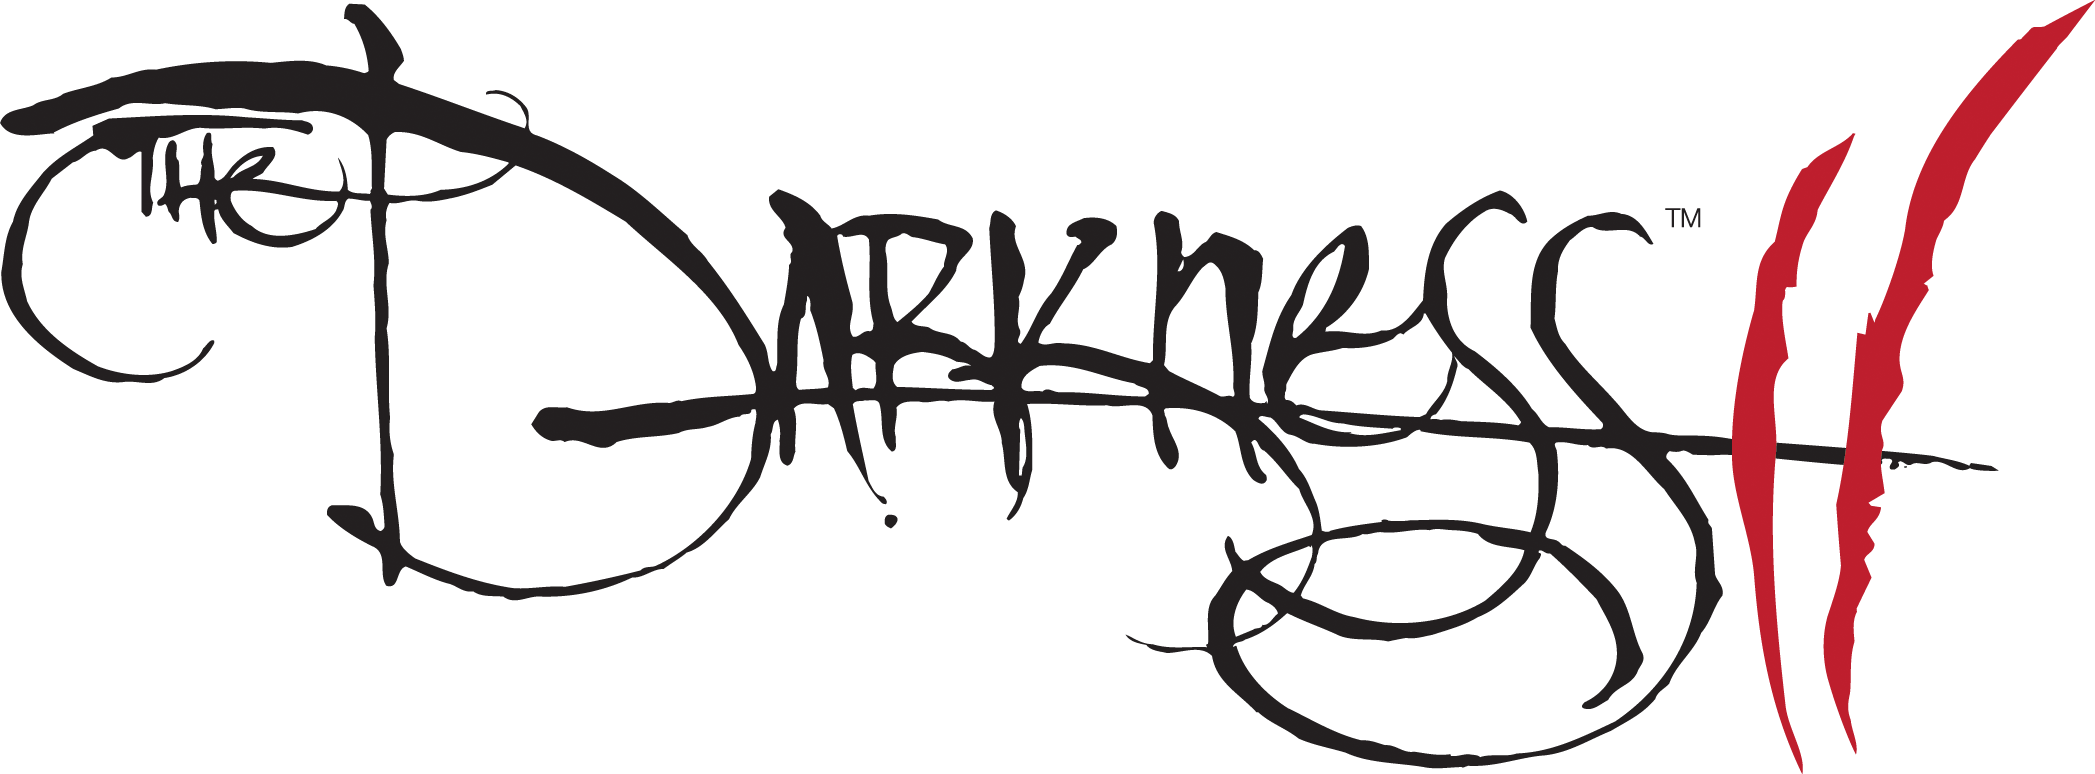 Darkness Logo - DARKNESS II LOGO